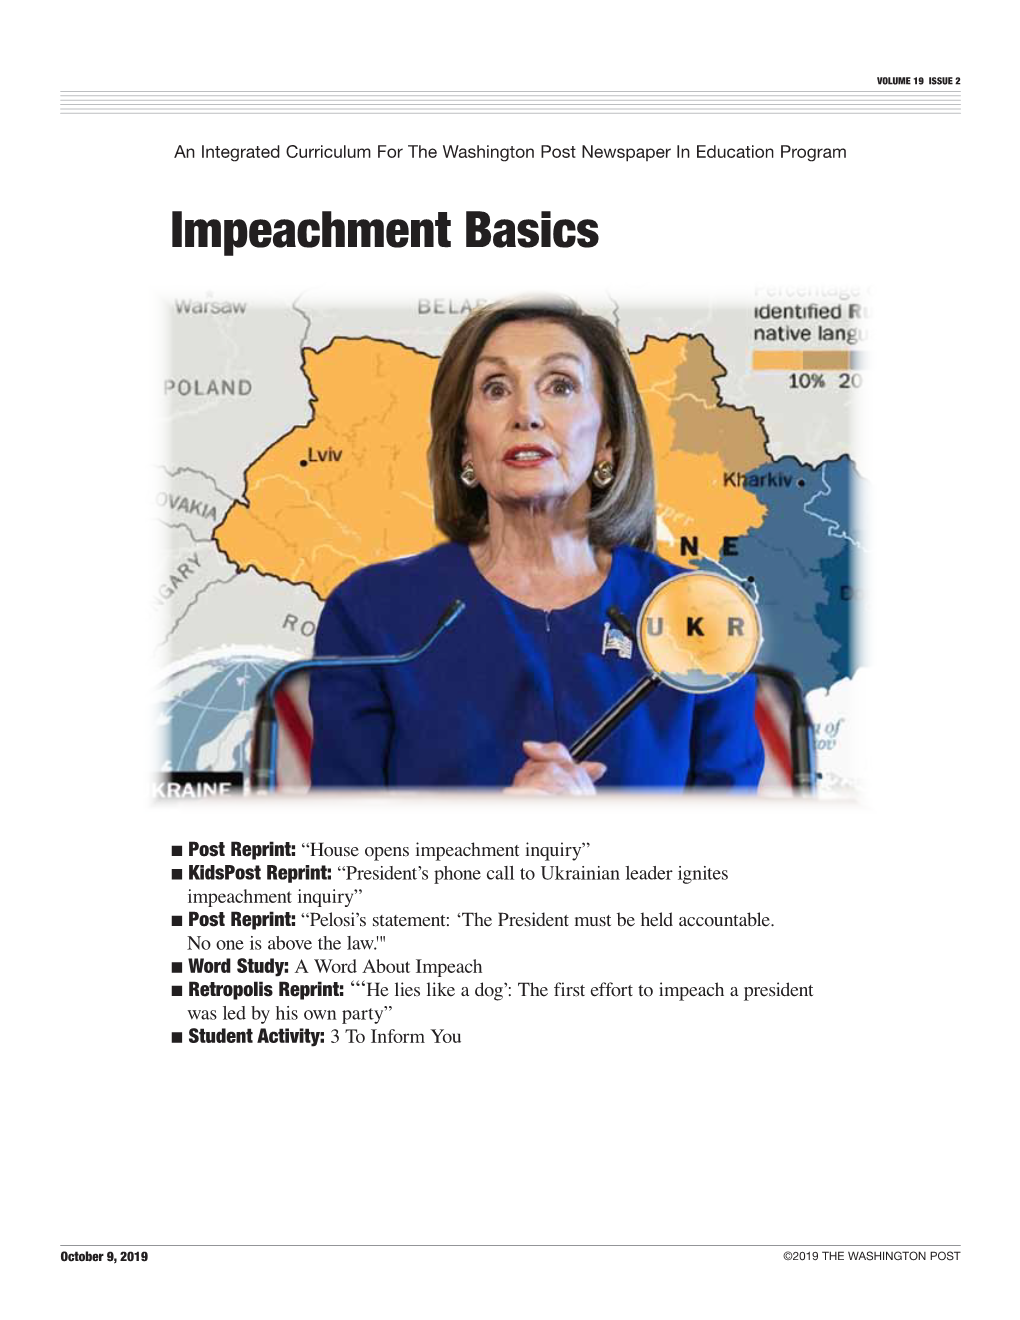 Impeachment Basics